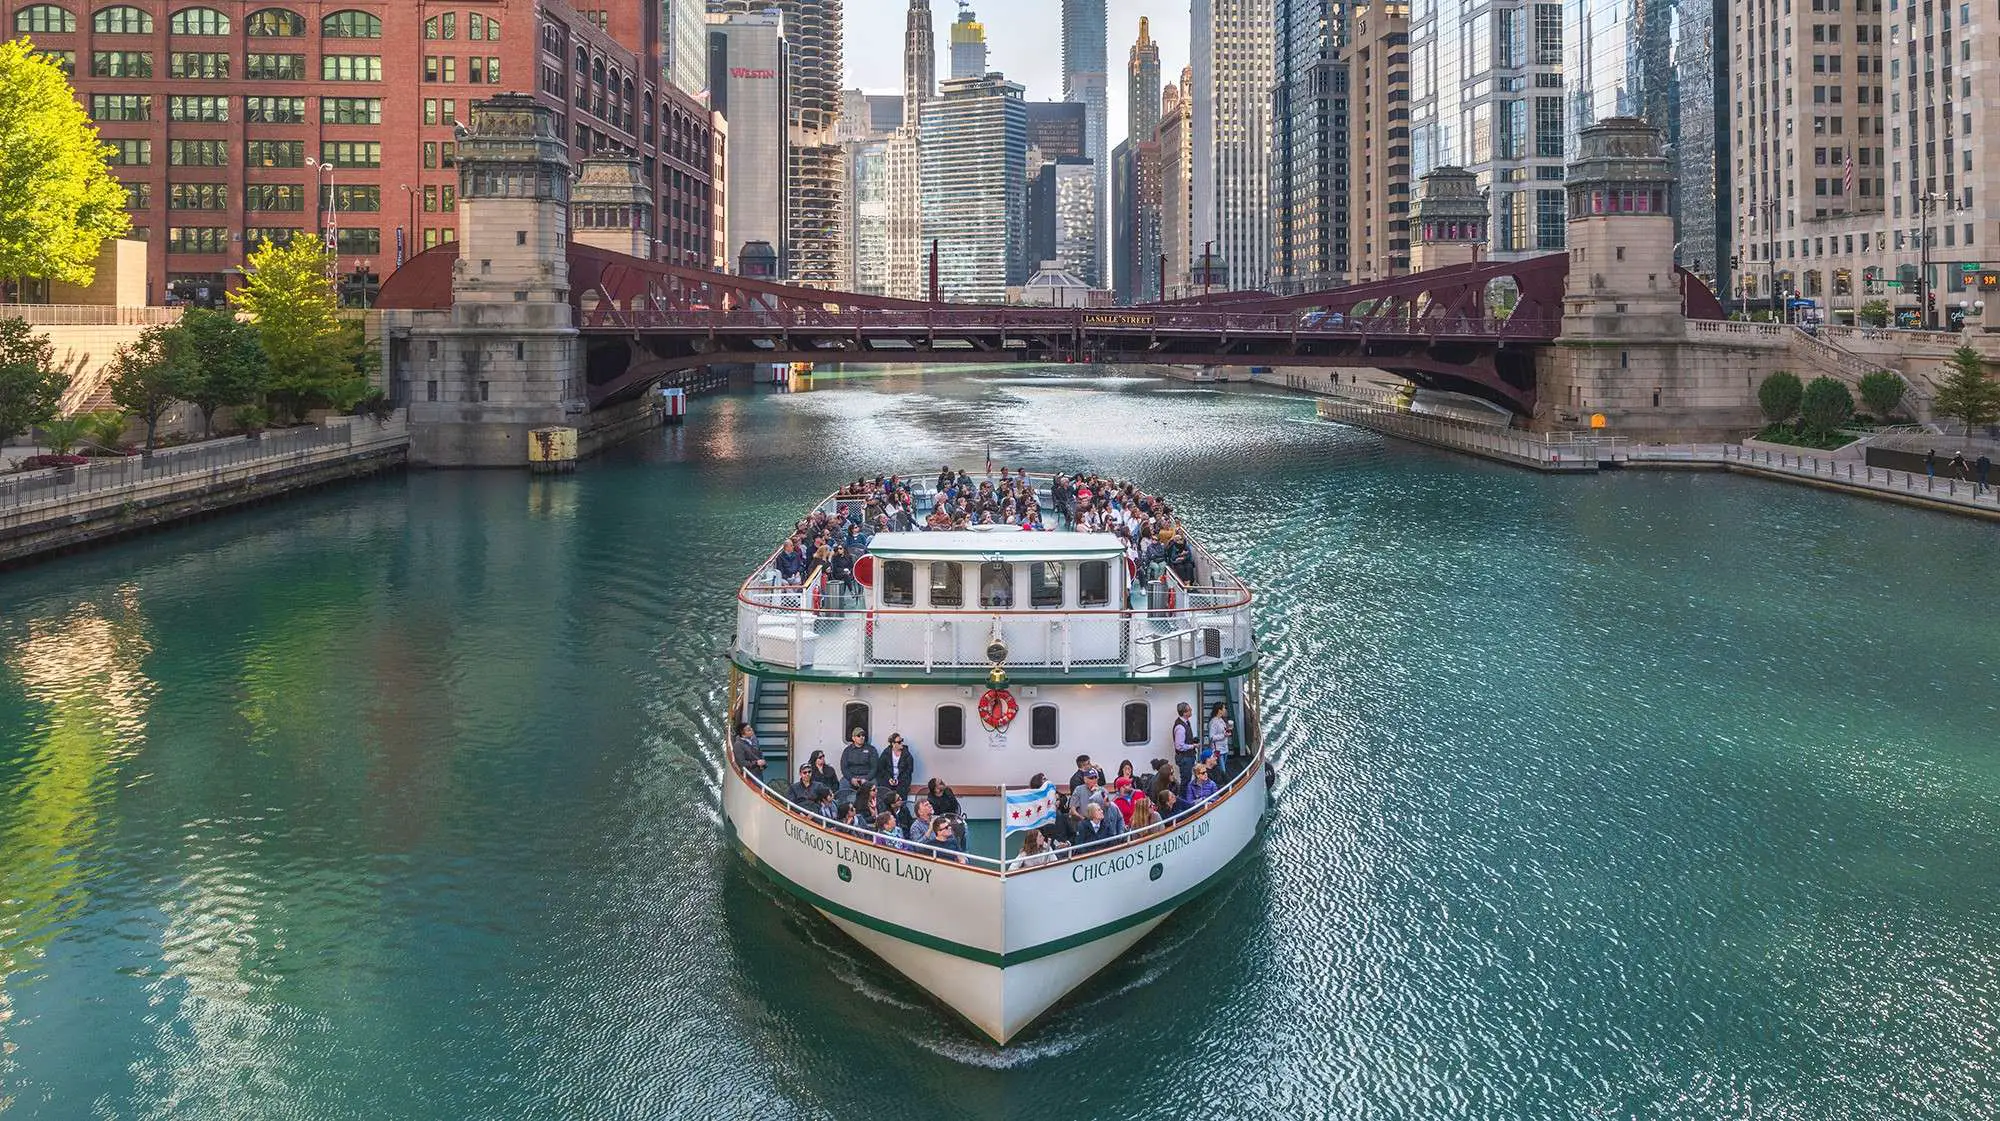 Chicago Architecture Foundation Center River Cruise aboard Chicago